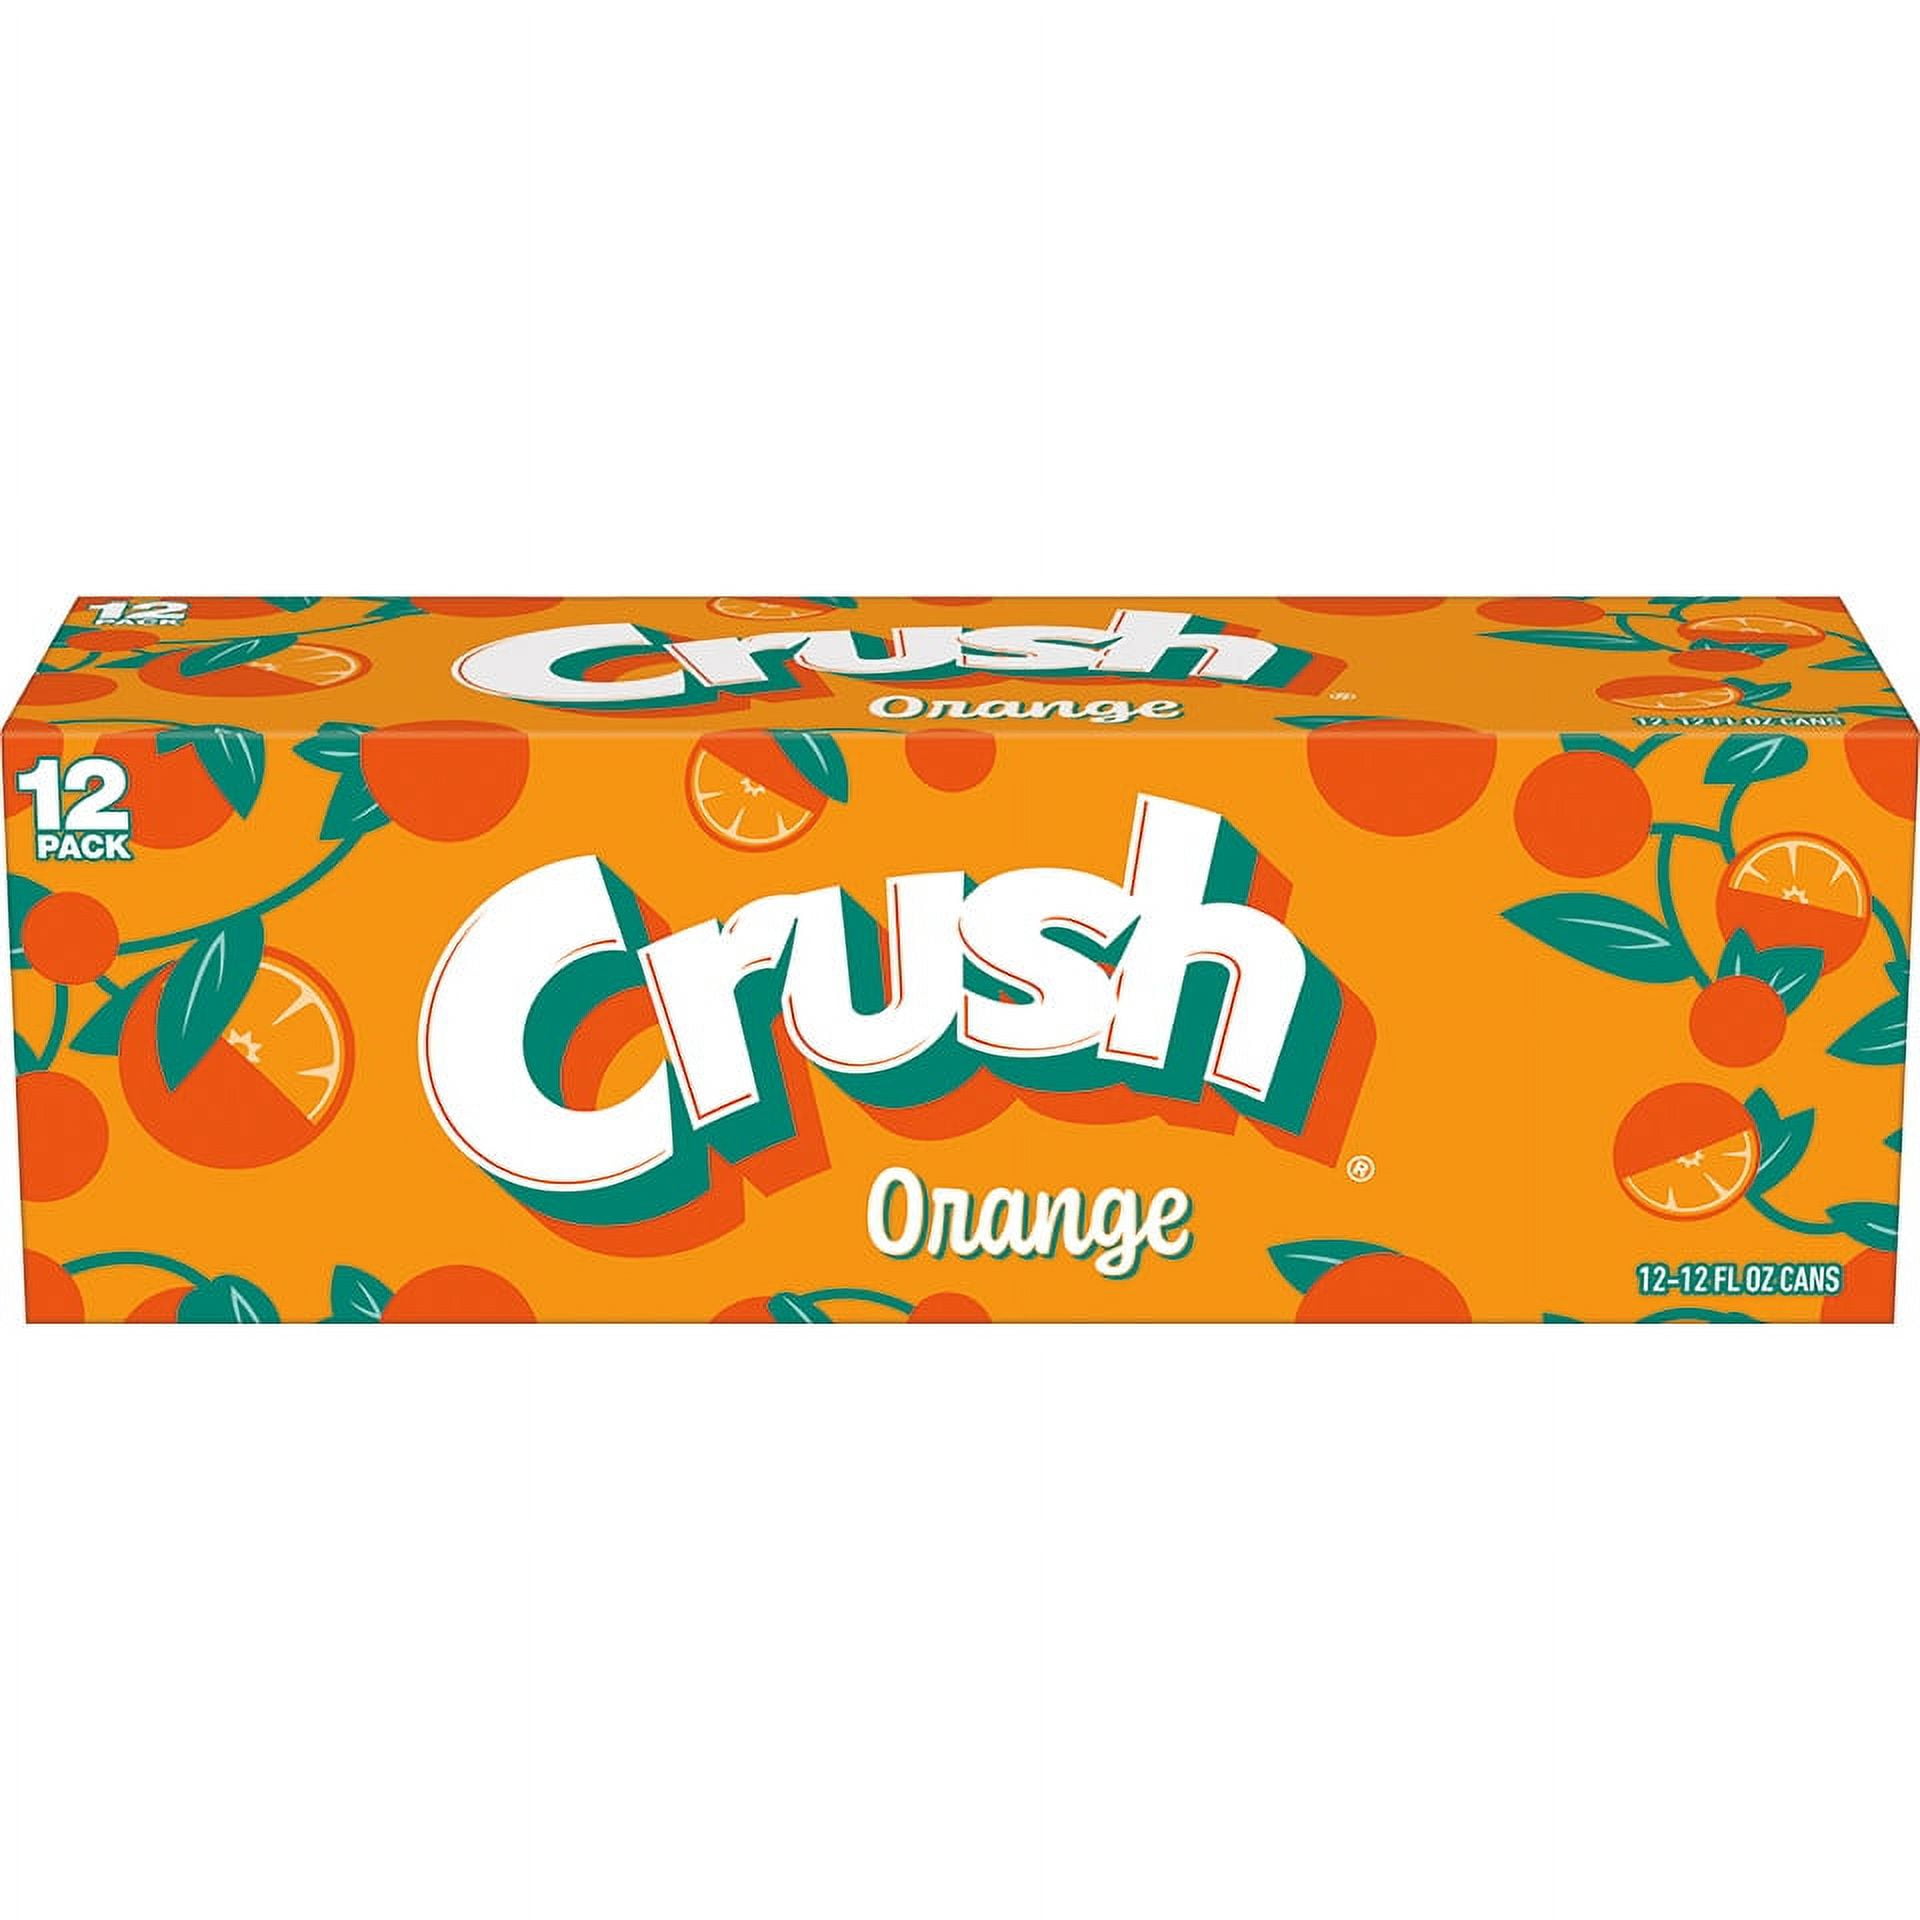 Crush ORANGE CRUSH LONGNECKS - they brought it back, 12 Fl Oz (Pack of 12)